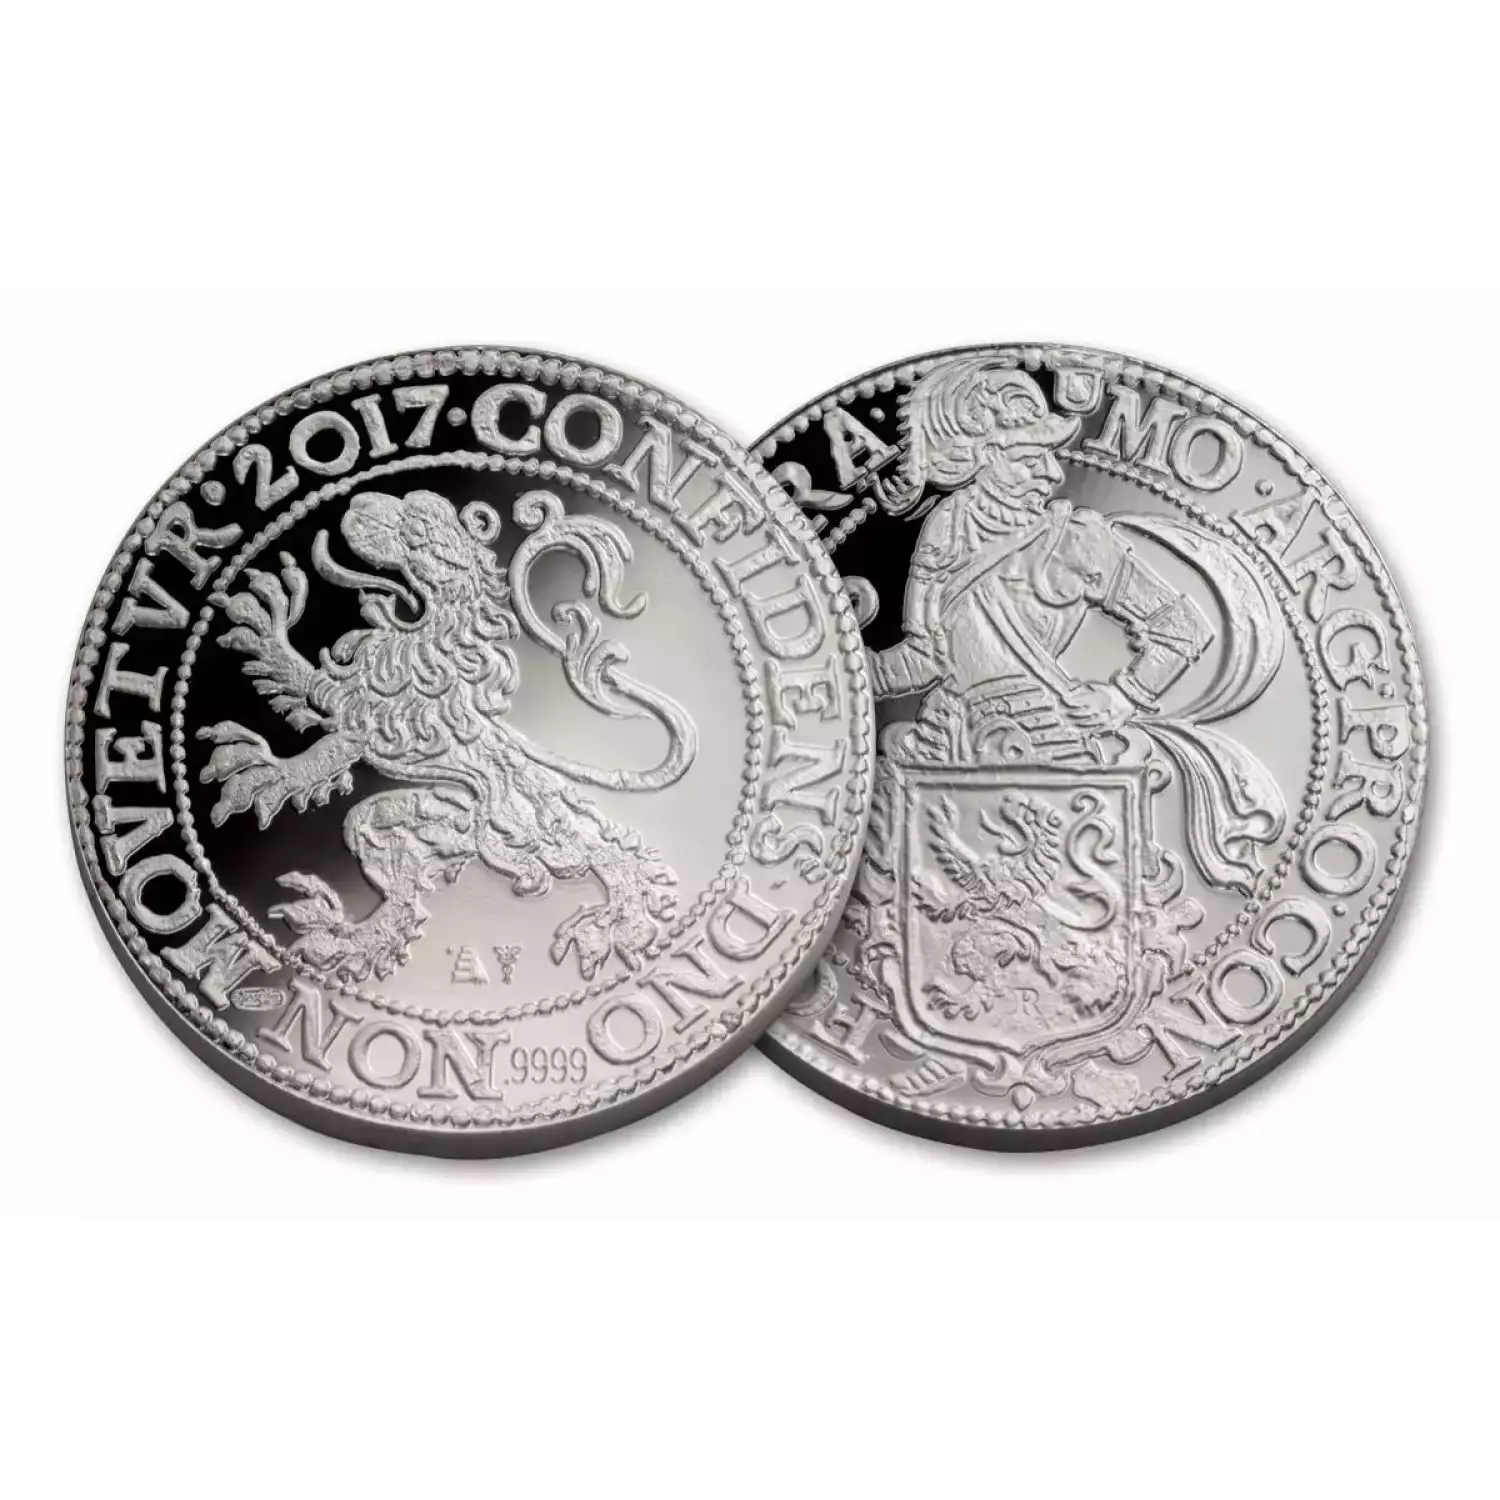 2017 400th year annivarsay Netherlands Lion coin